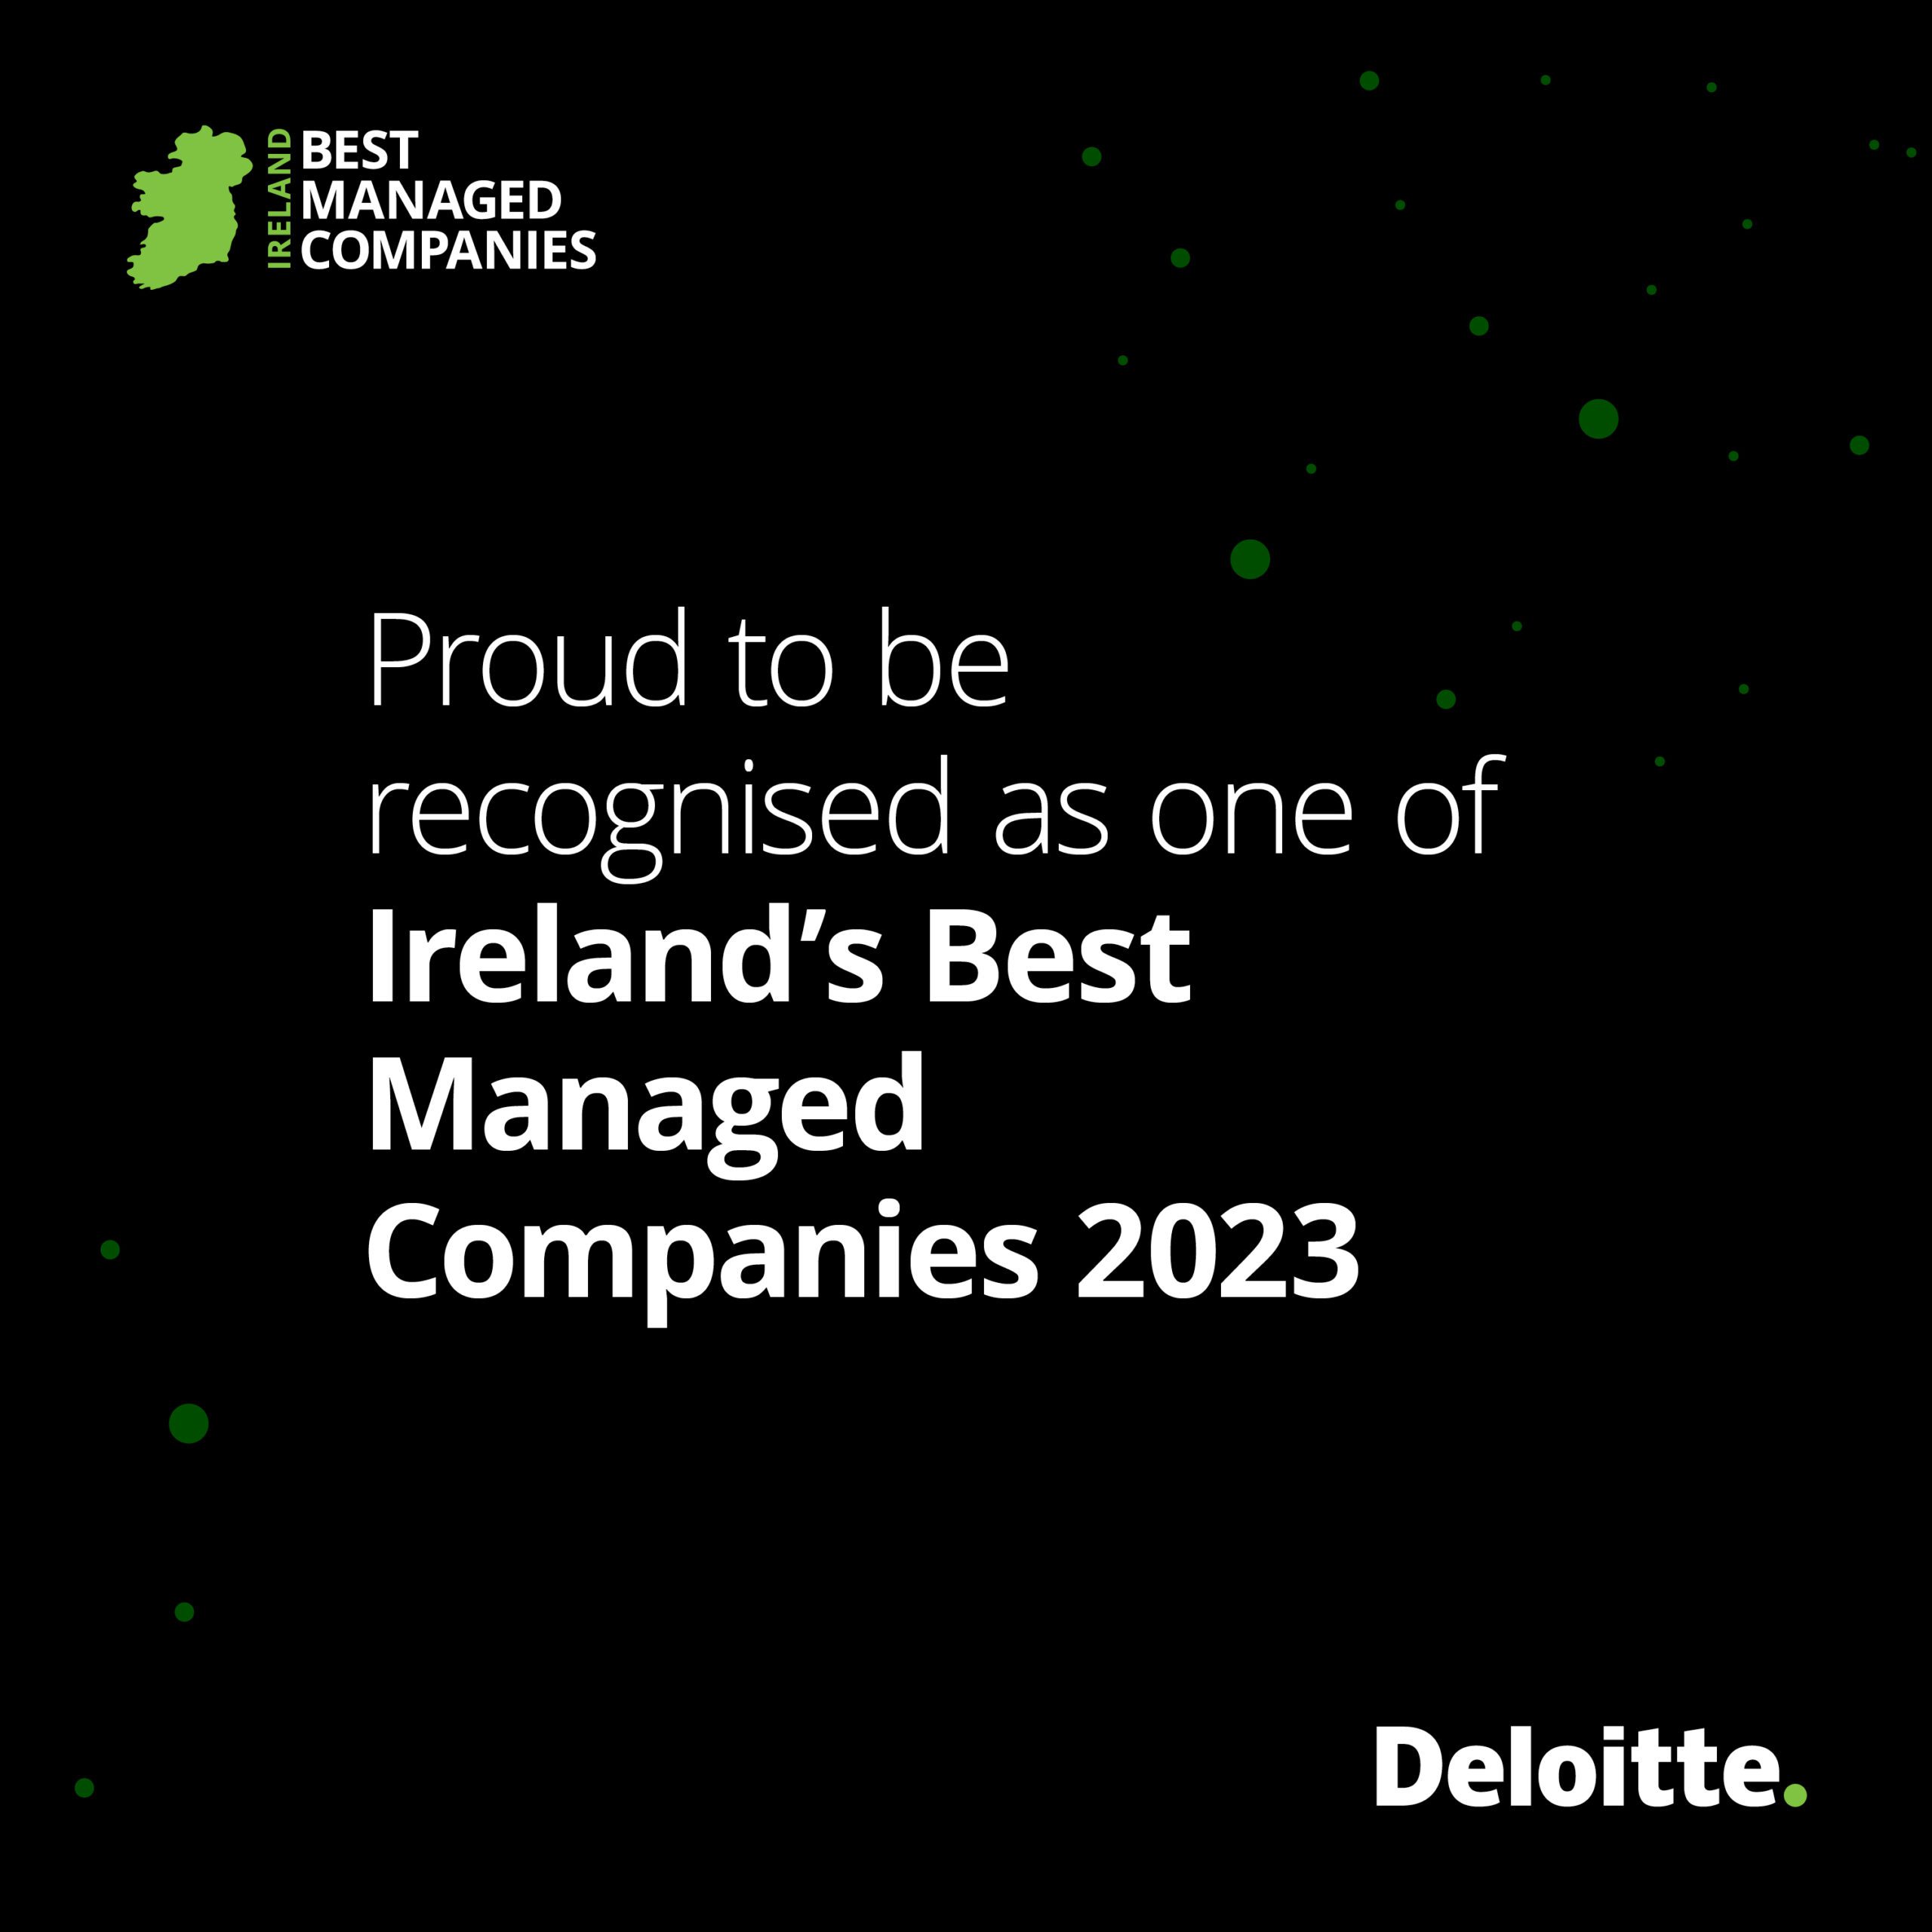 Ireland’s Best Managed Companies 2023